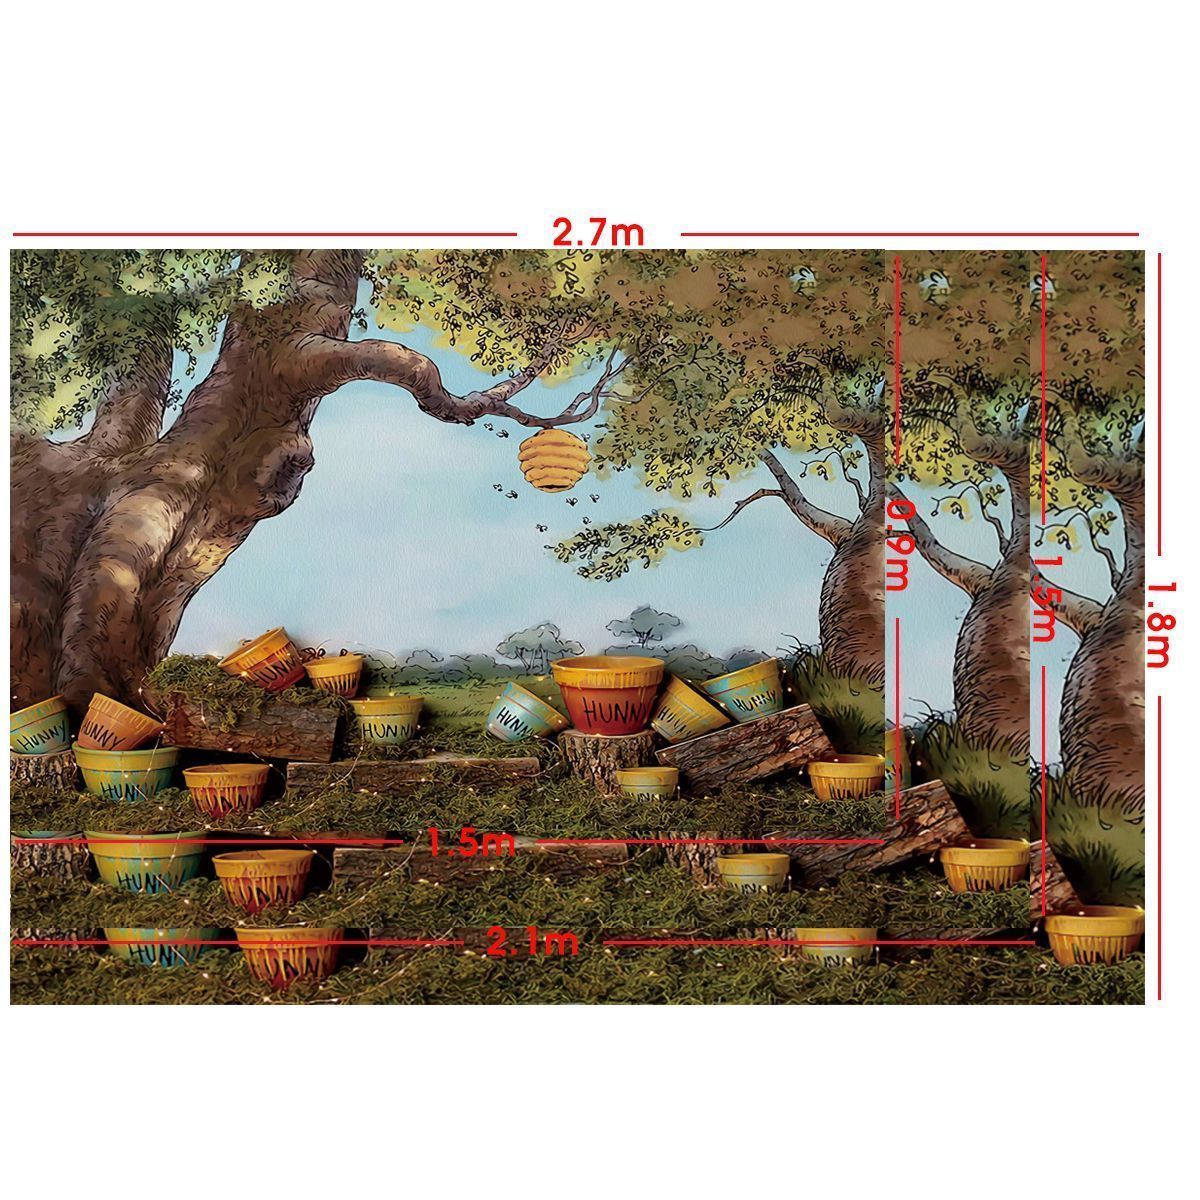 5x3FT-7x5FT-9x6FT-Outdoor-Tree-Honeycomb-Photography-Backdrop-Background-Studio-Prop-1636016